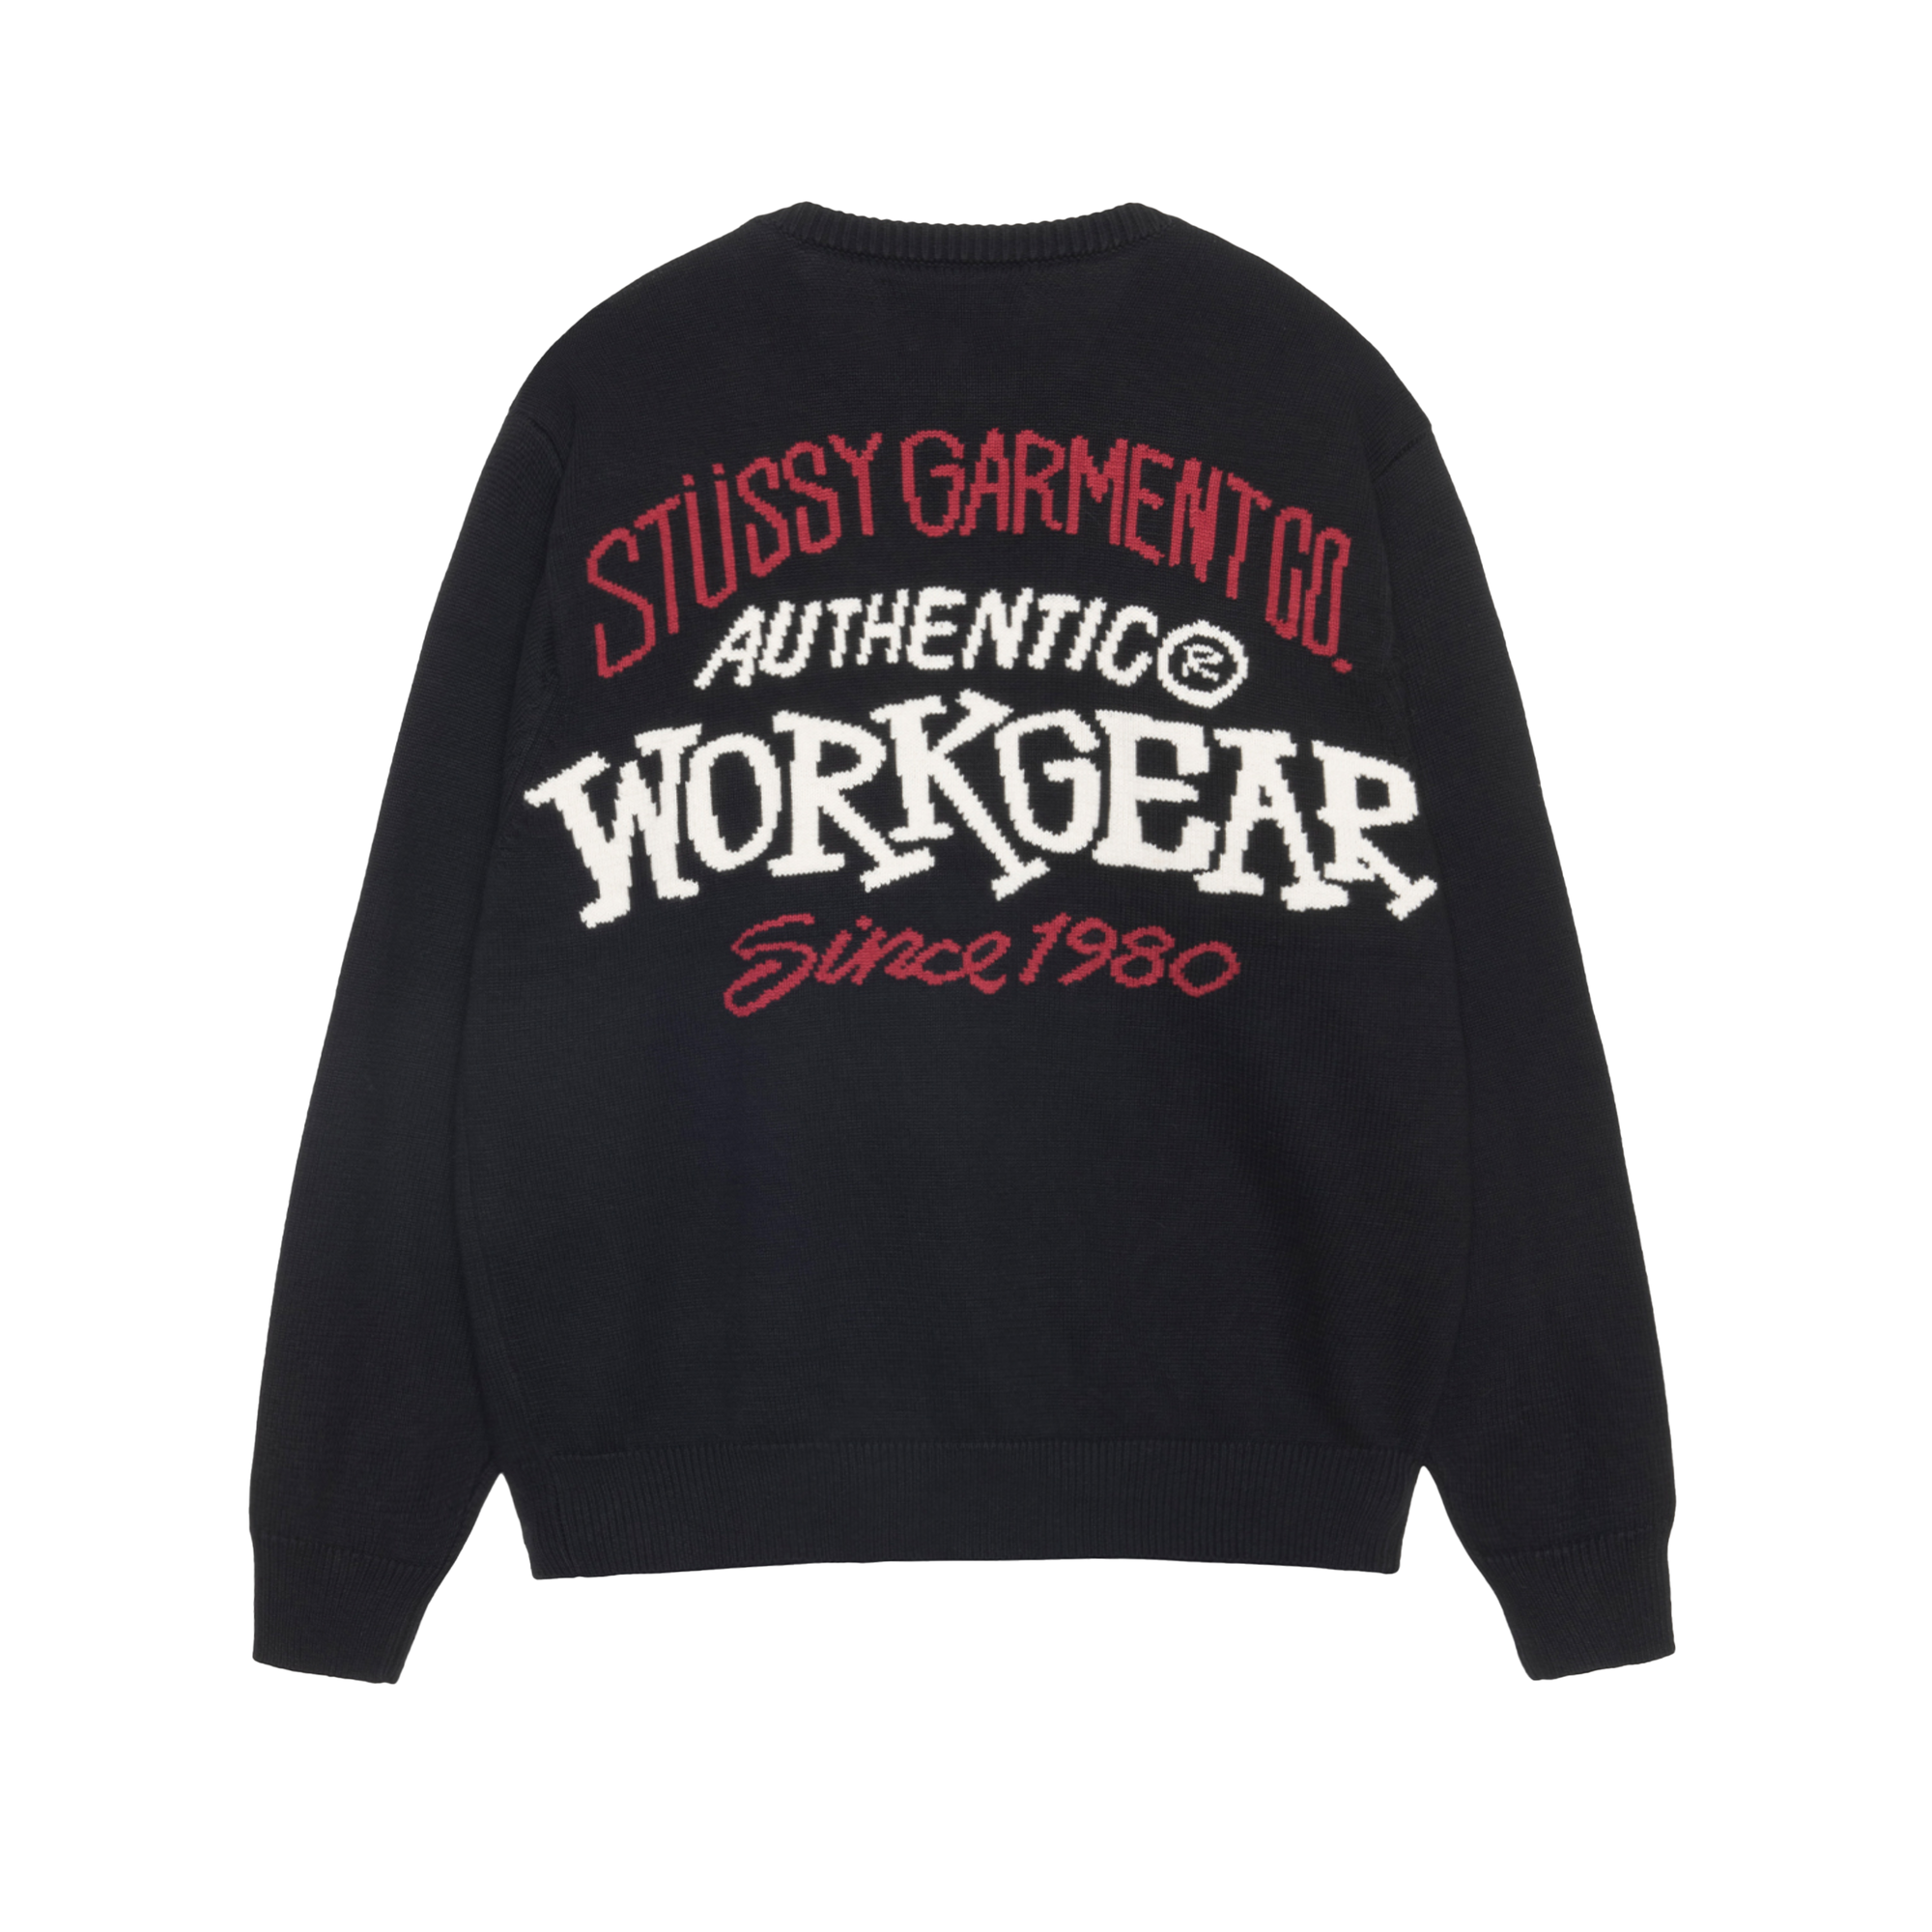 STÜSSY - Authentic Workgear Sweater - (Black)